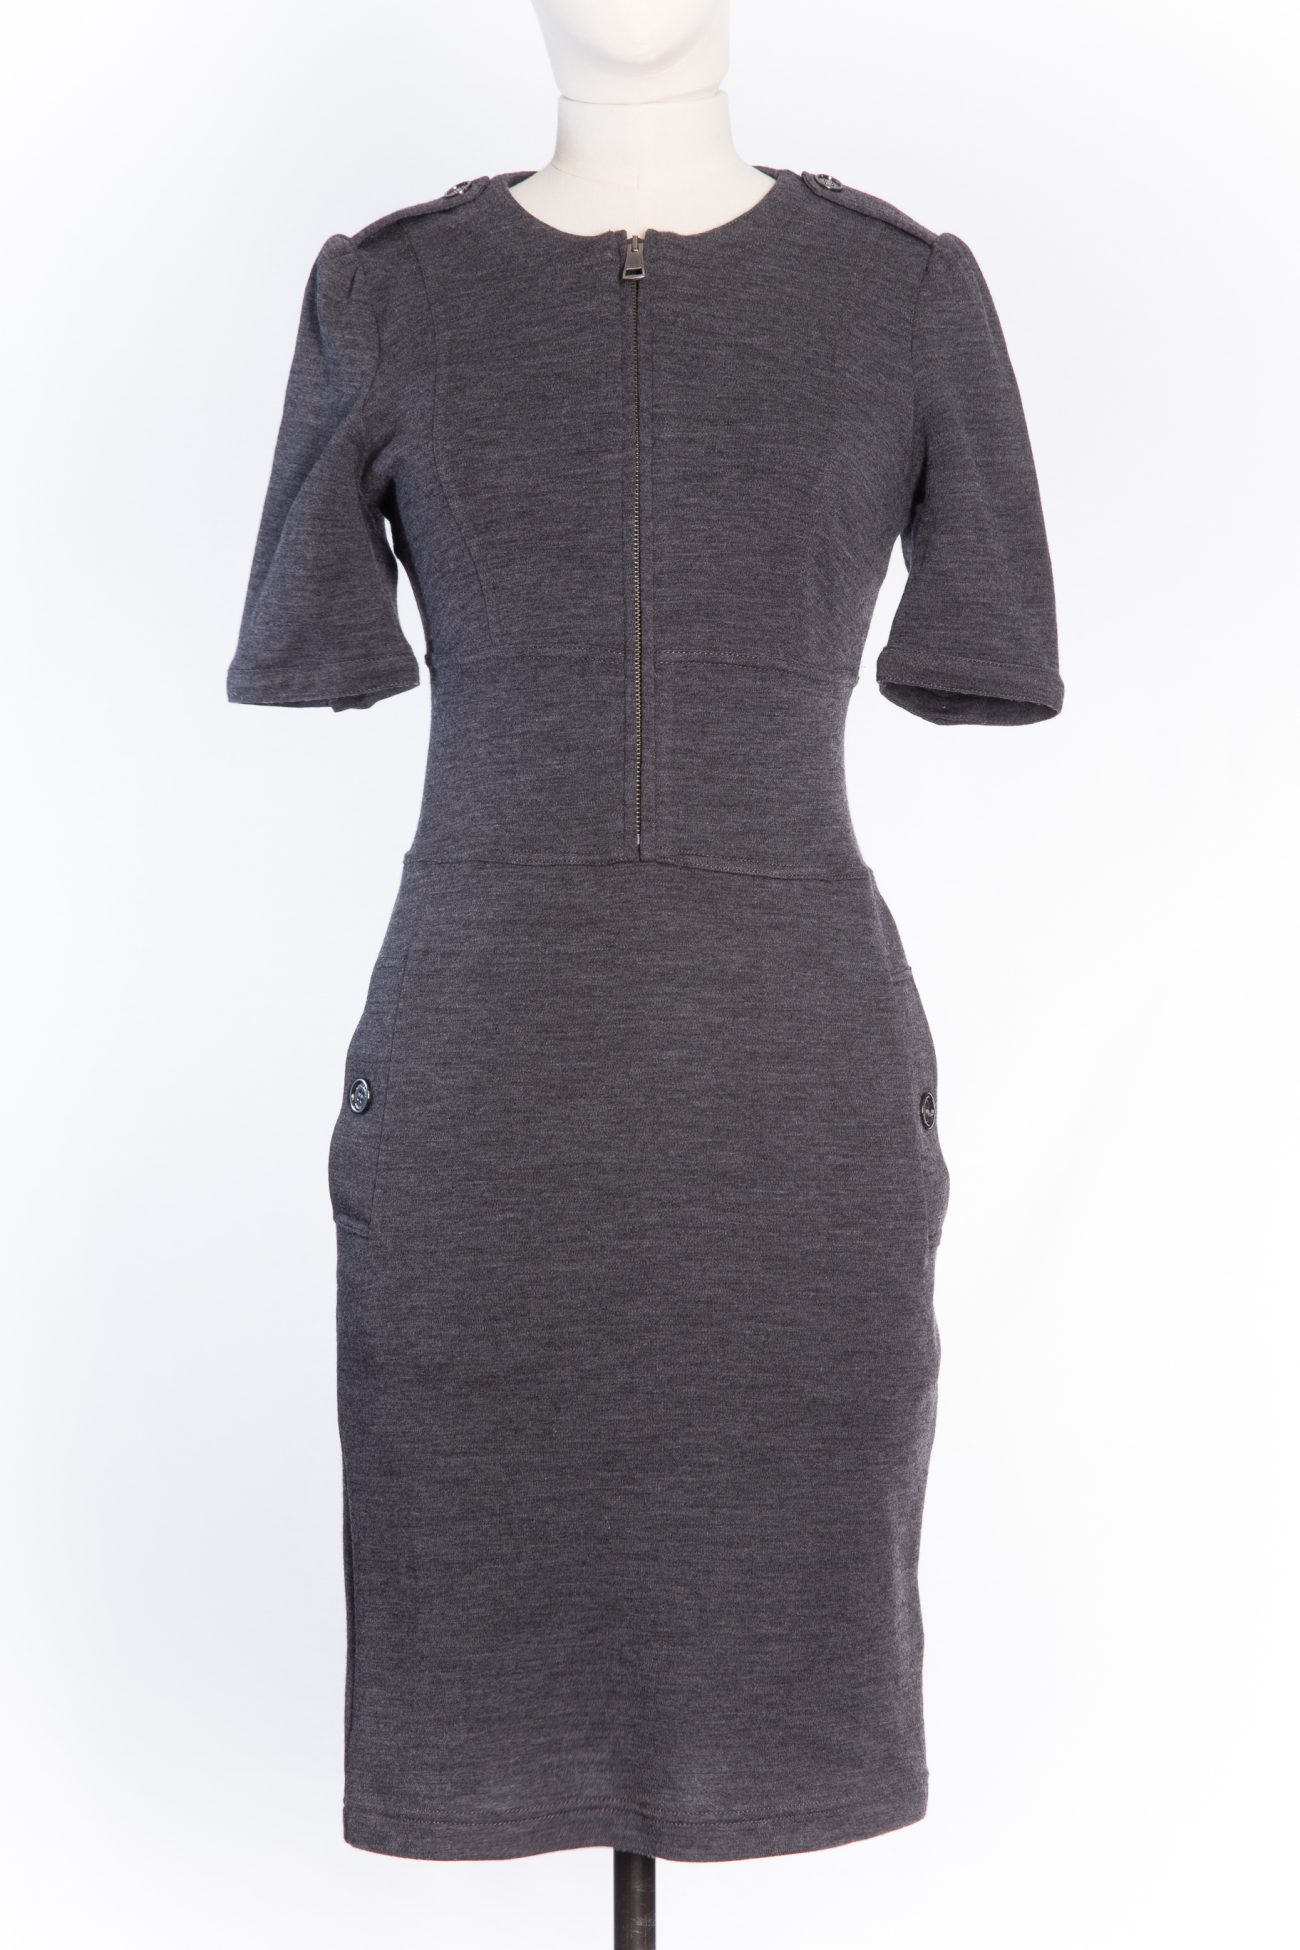 Burberry Wool Mid-Length Dress